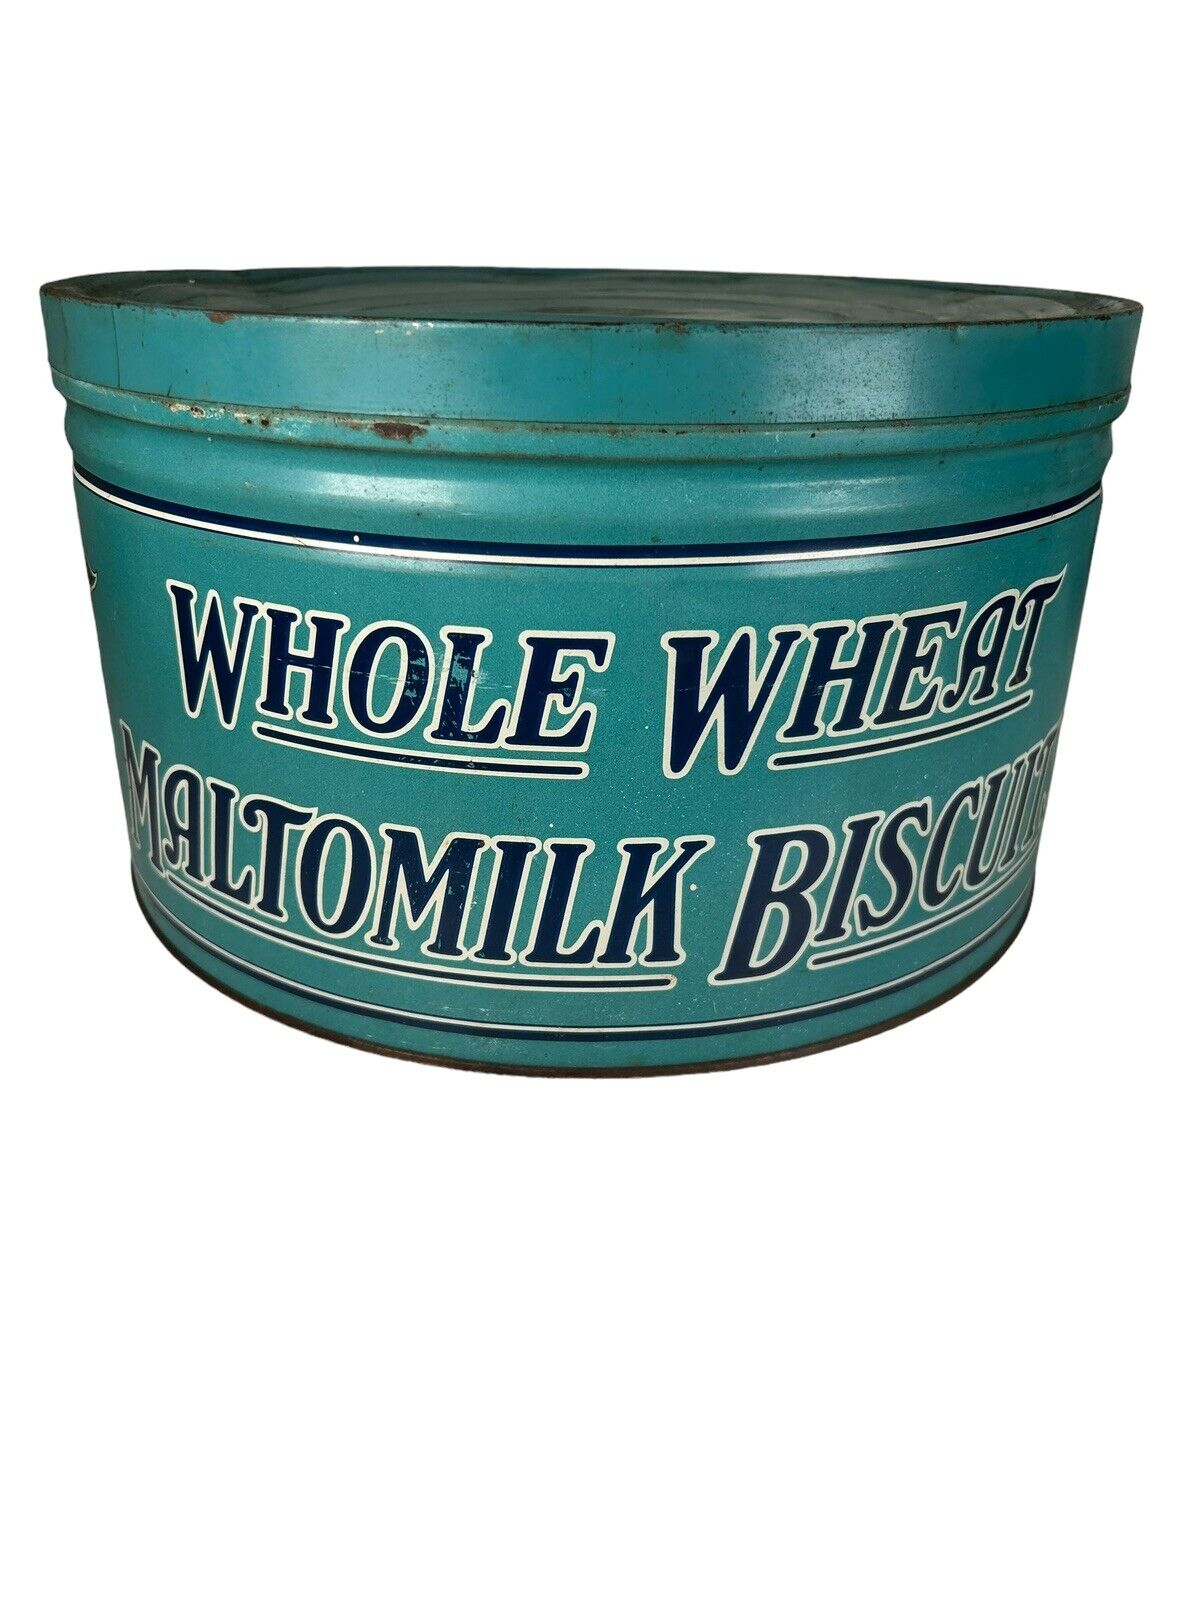 Vintage Whole Wheat Maltomilk Biscuits Pennant Tin 1940’s MCM Cincinnati,Ohio